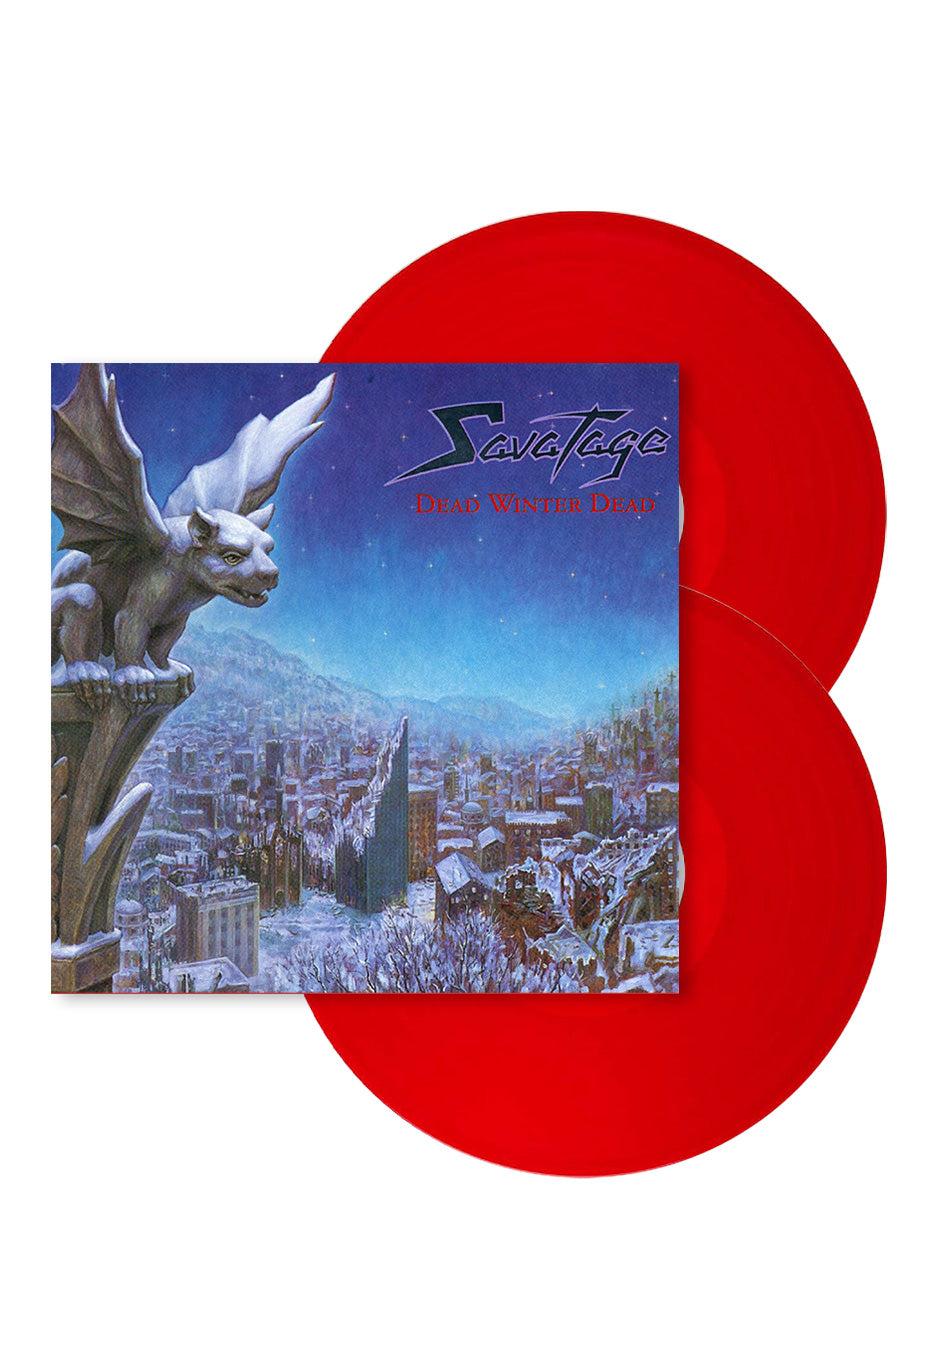 Savatage - Dead Winter Dead Ltd. Red - Colored 2 Vinyl